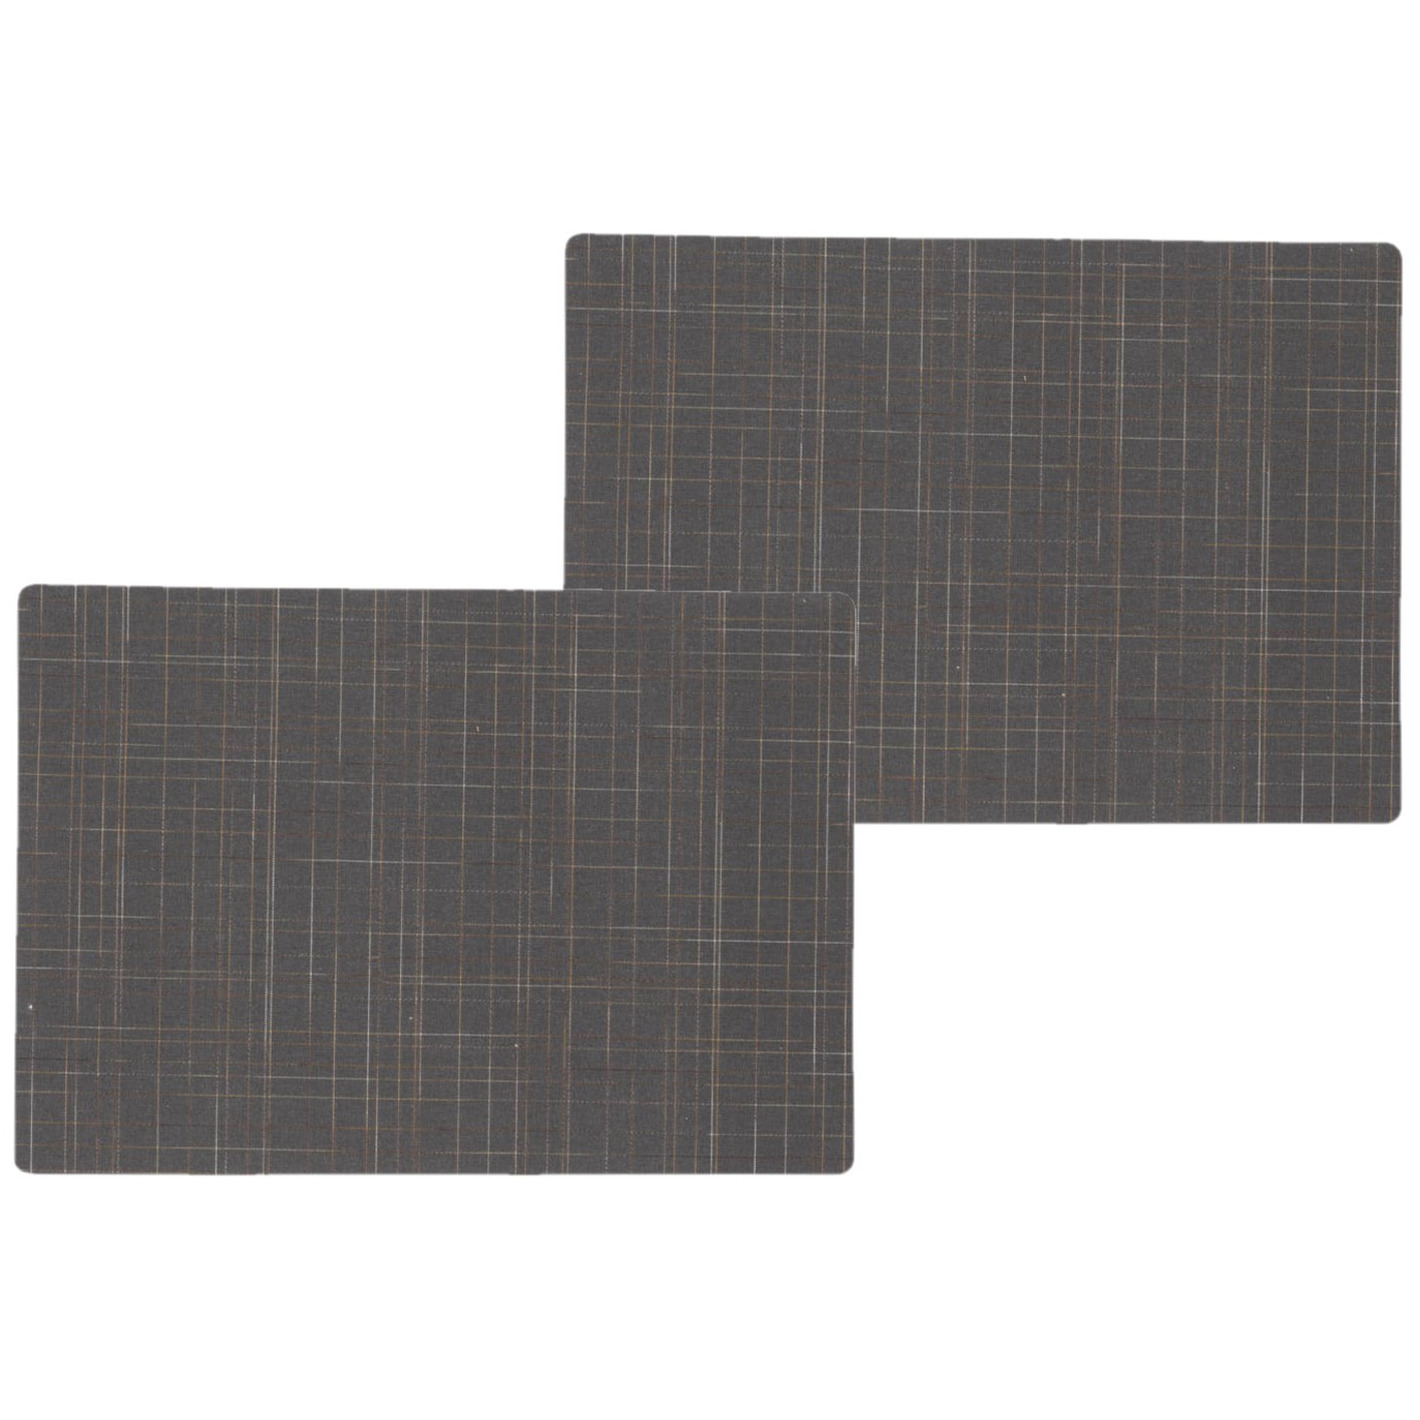 Wicotex 8x stuks stevige luxe Tafel placemats Liso grijs 30 x 43 cm -